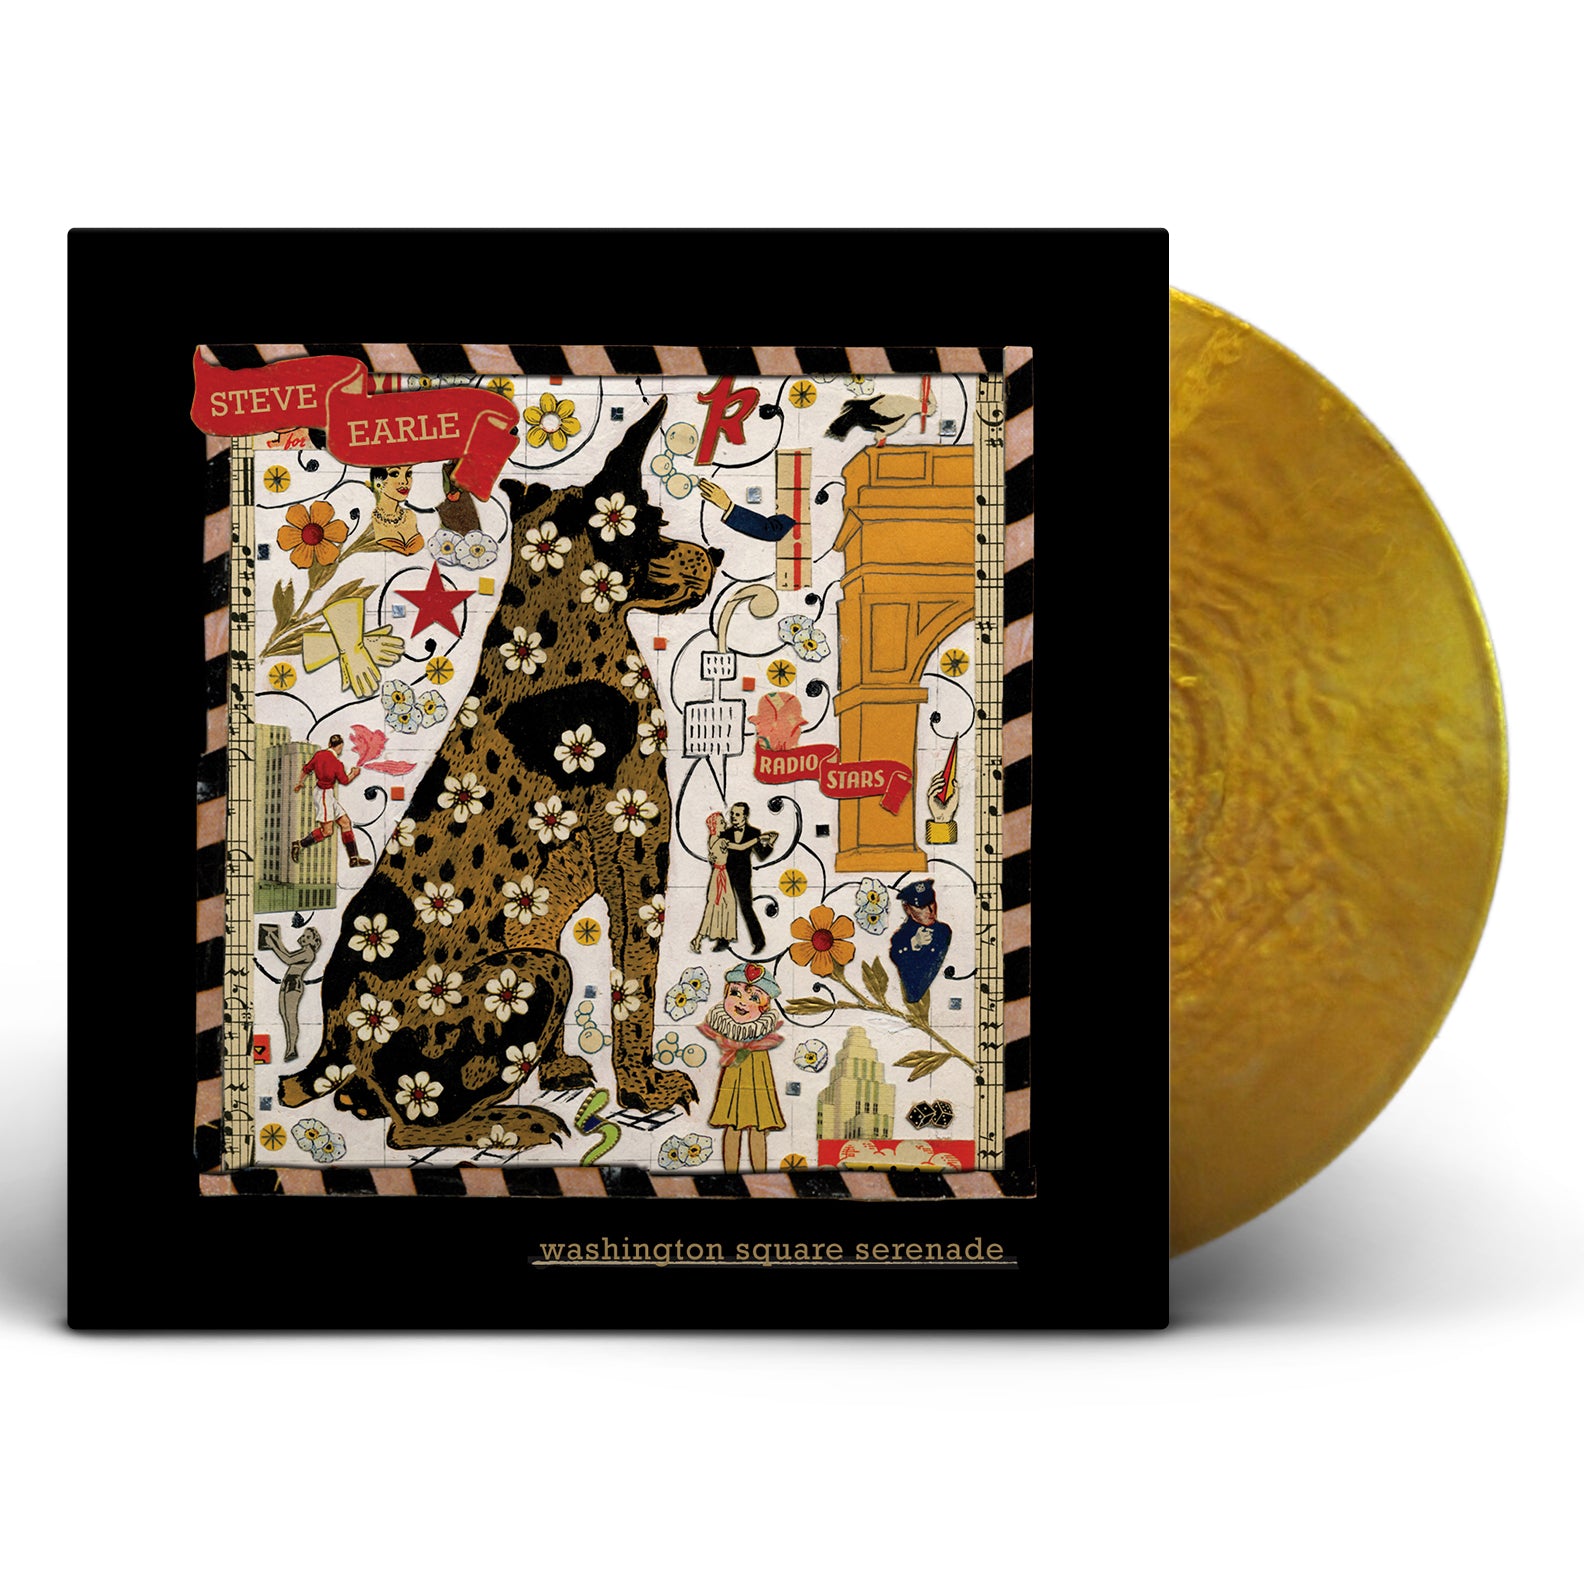 Steve Earle - Washington Square Serenade [Limited Edition Color Vinyl]